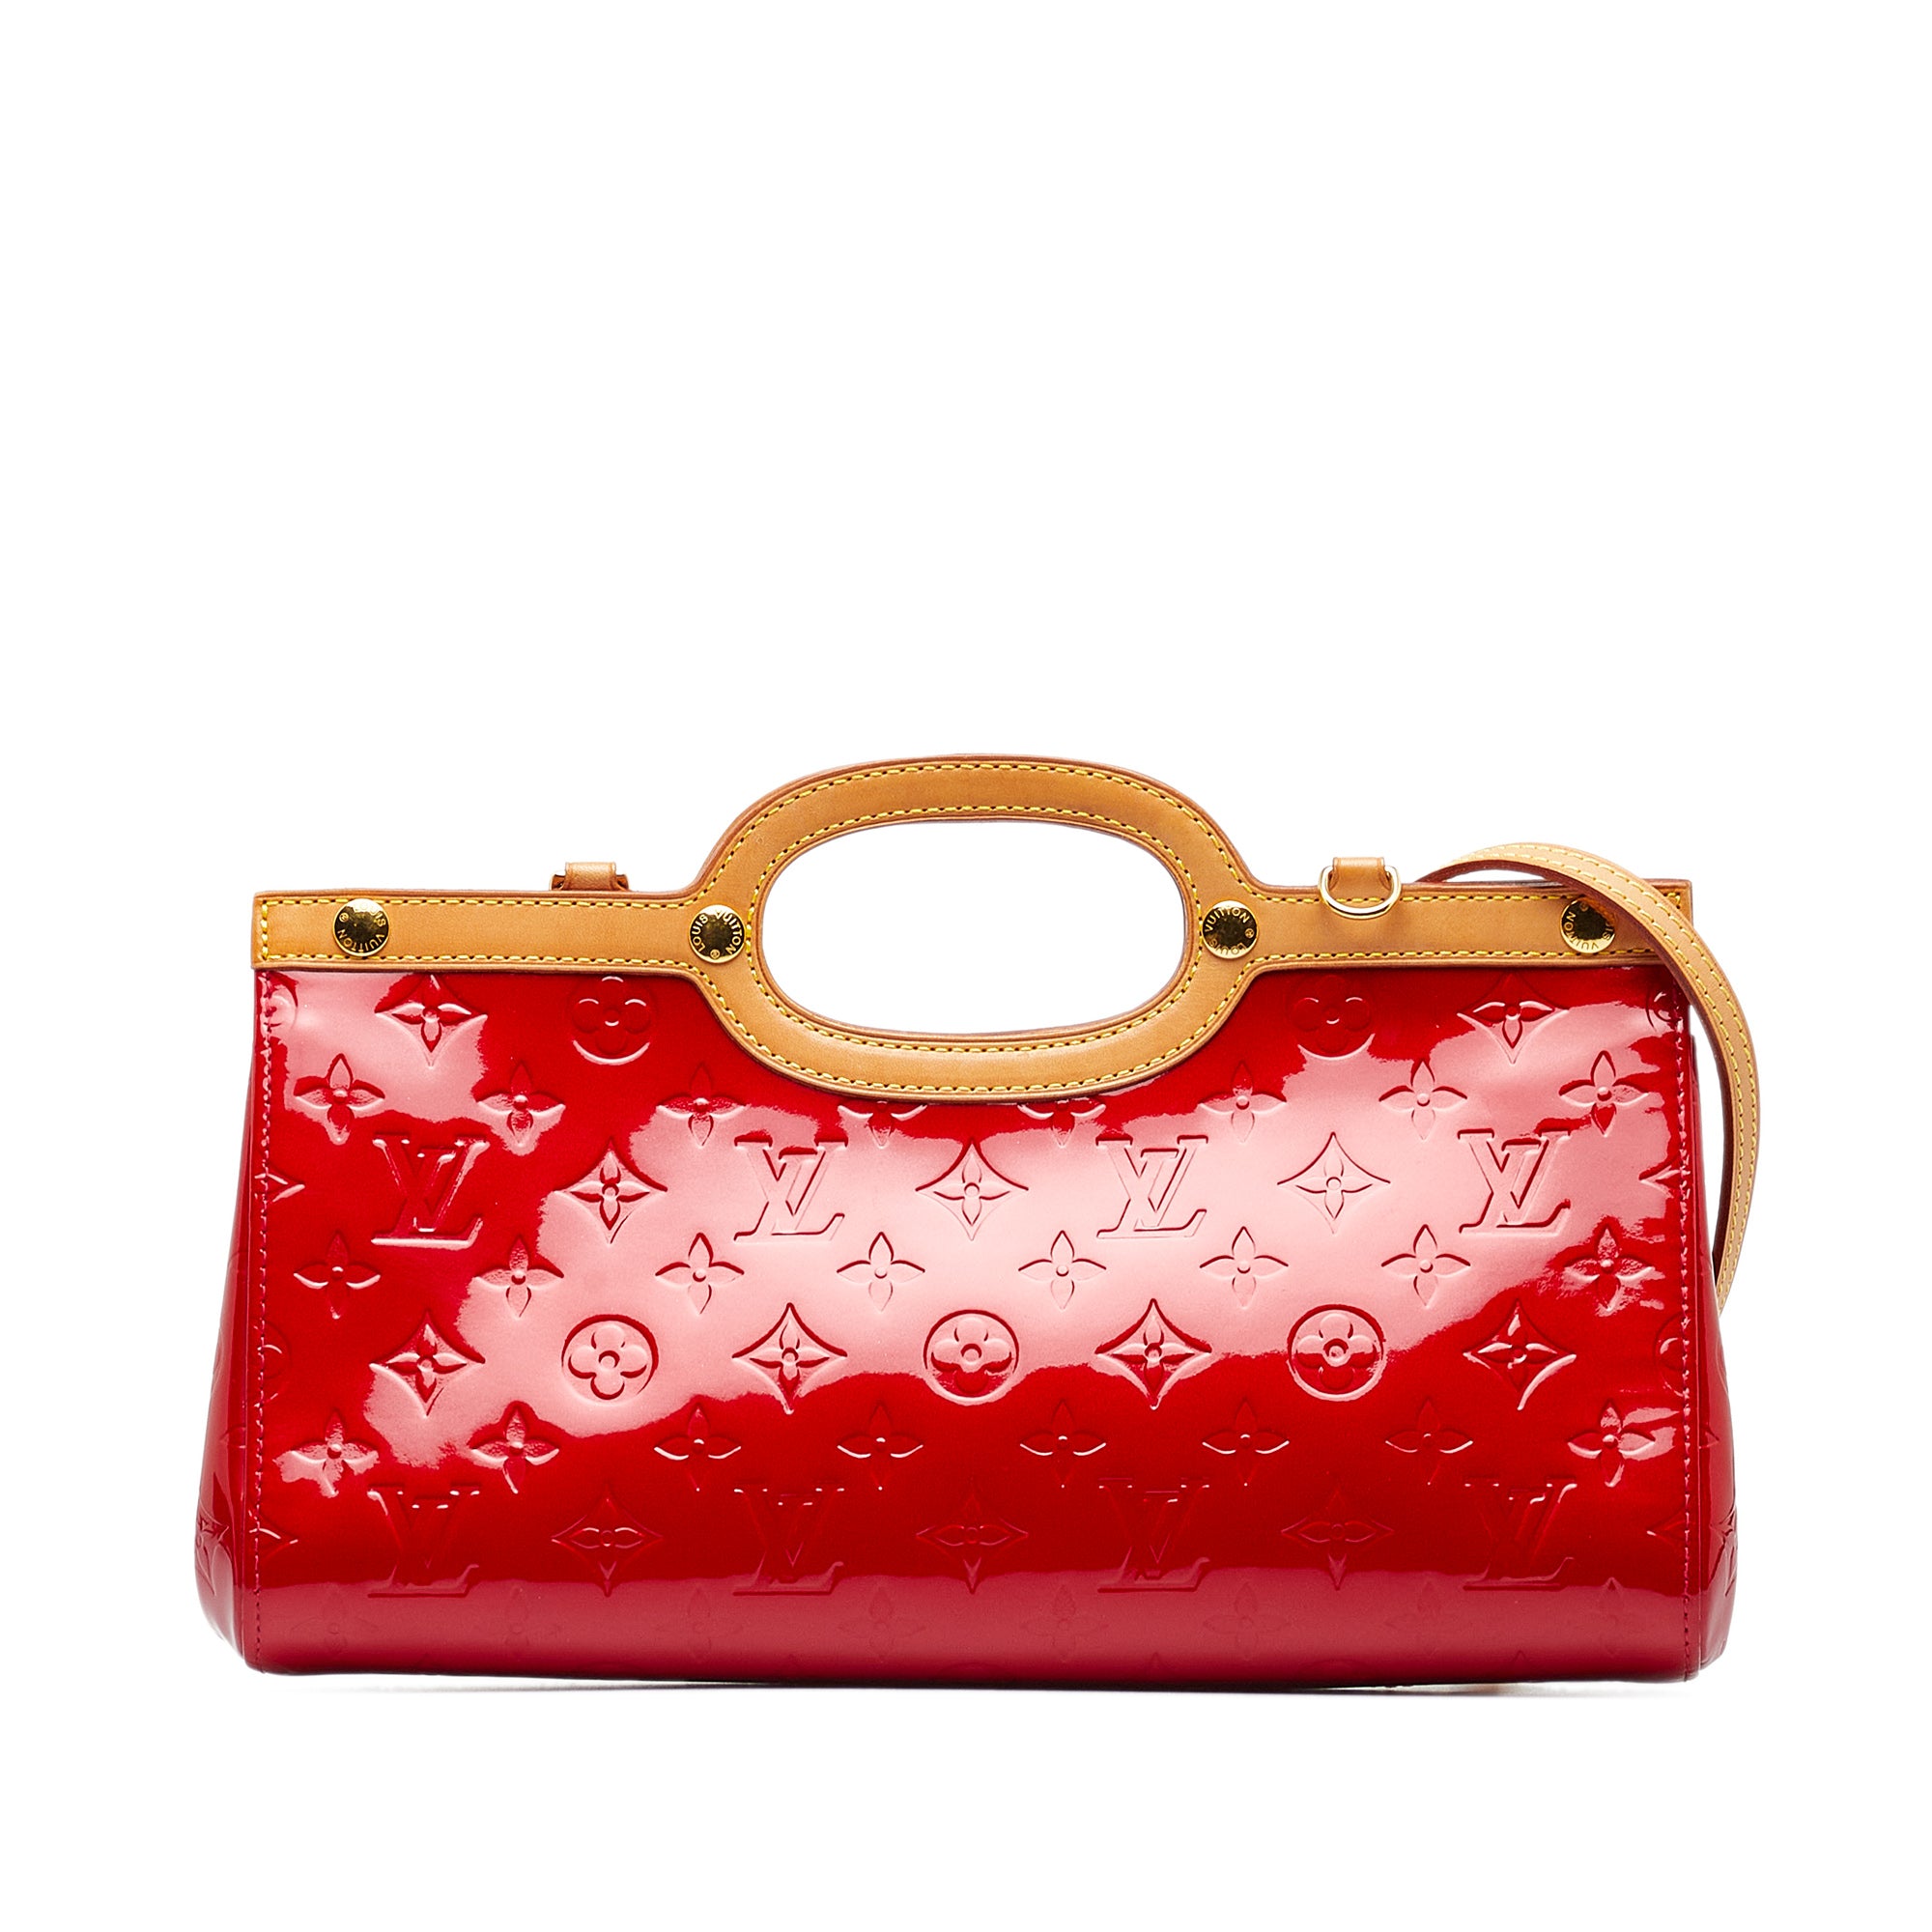 Louis Vuitton Vernis Roxbury Drive, Louis Vuitton Handbags